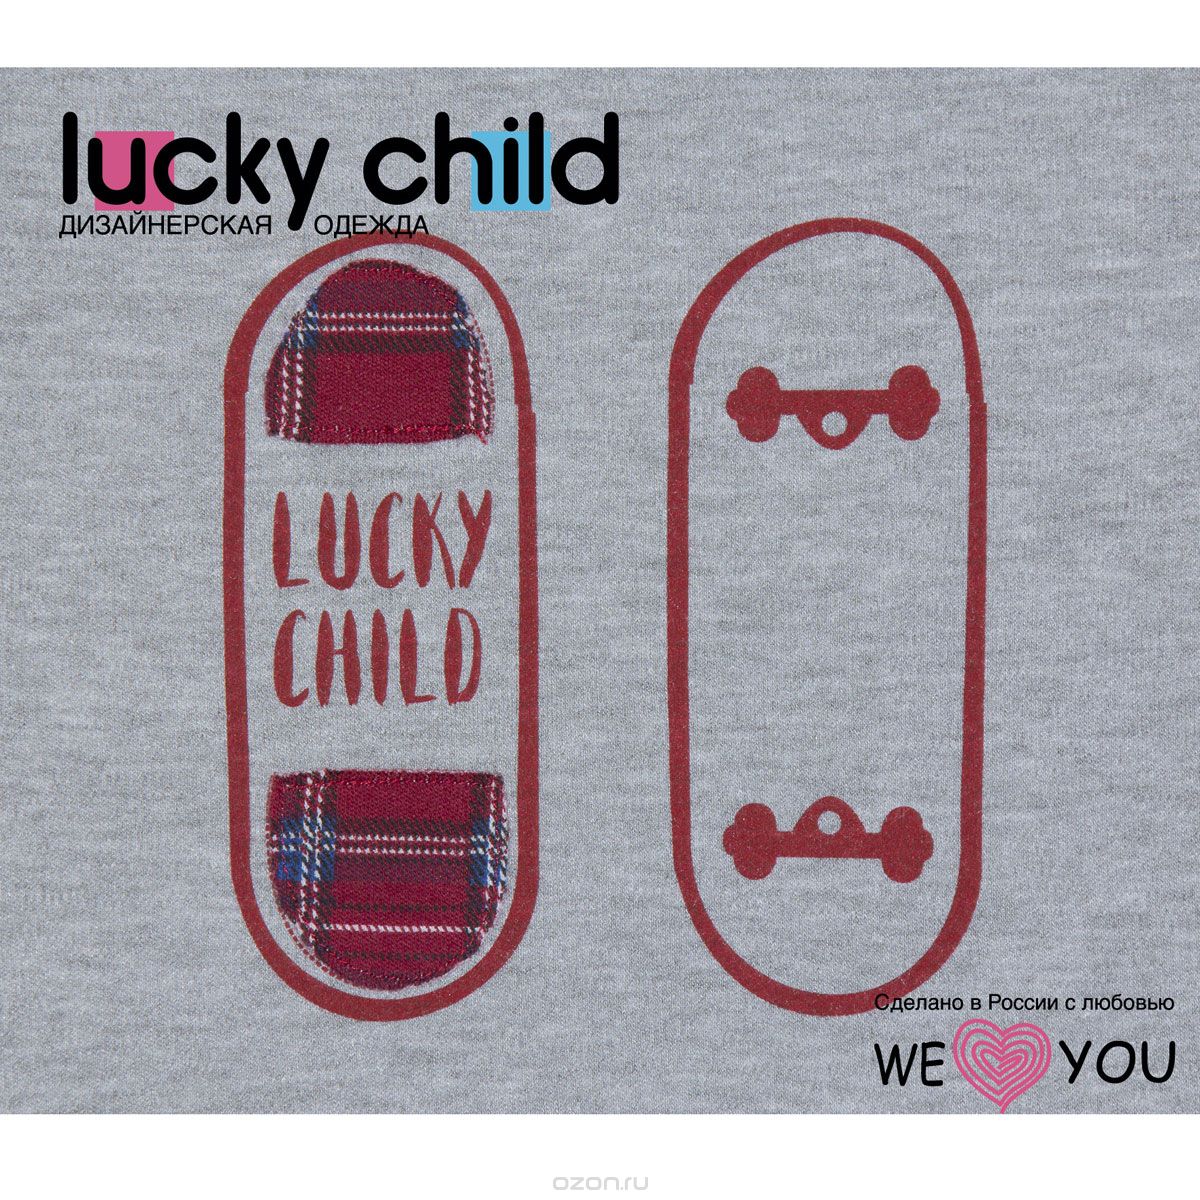    Lucky Child: , , : , . 13-410.  110/116